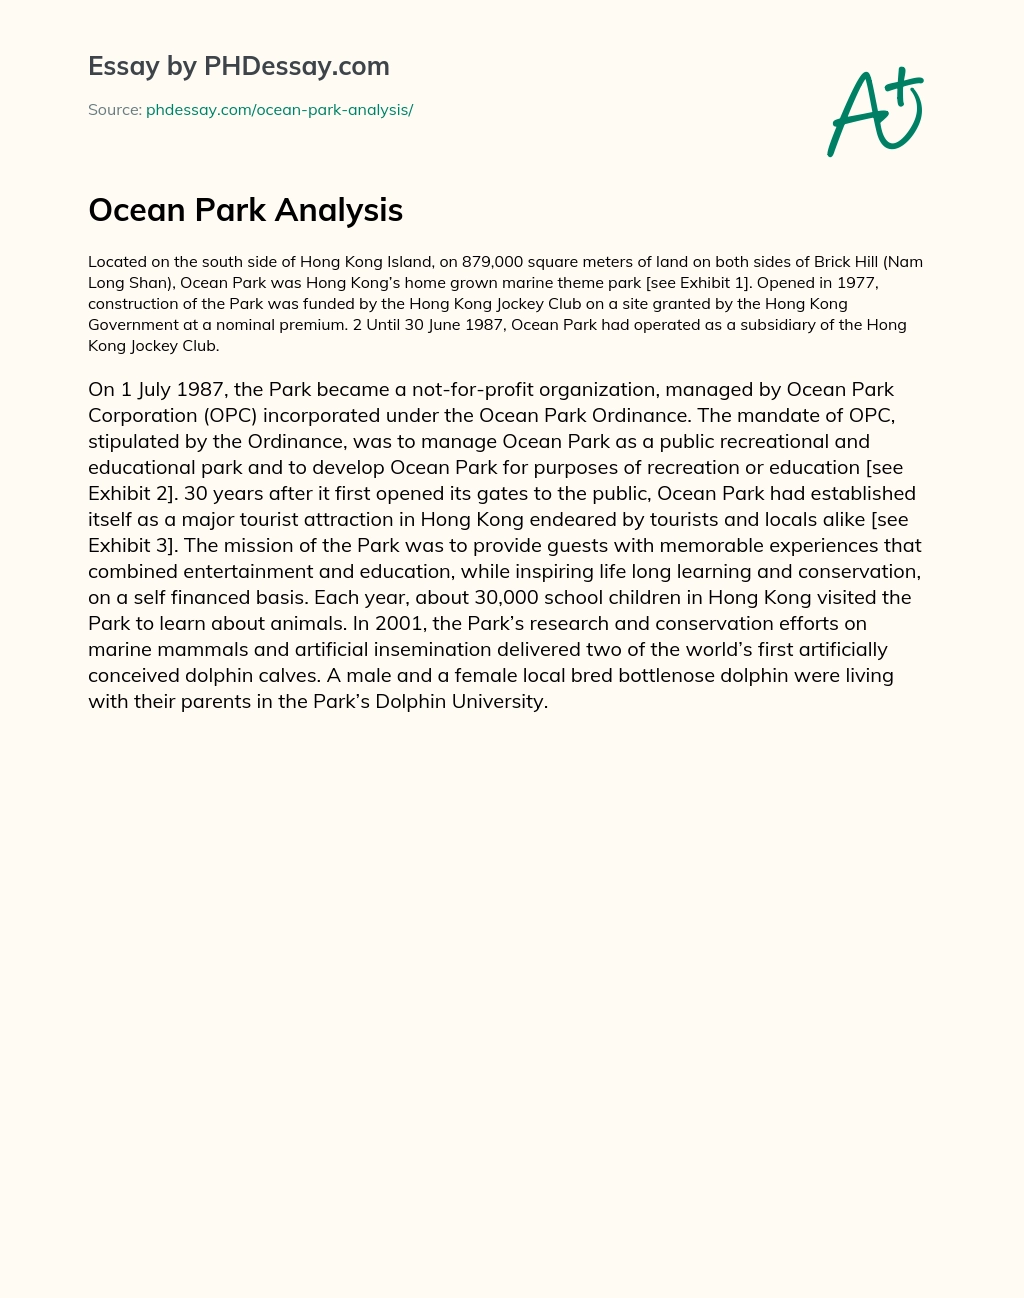 Ocean Park Analysis essay